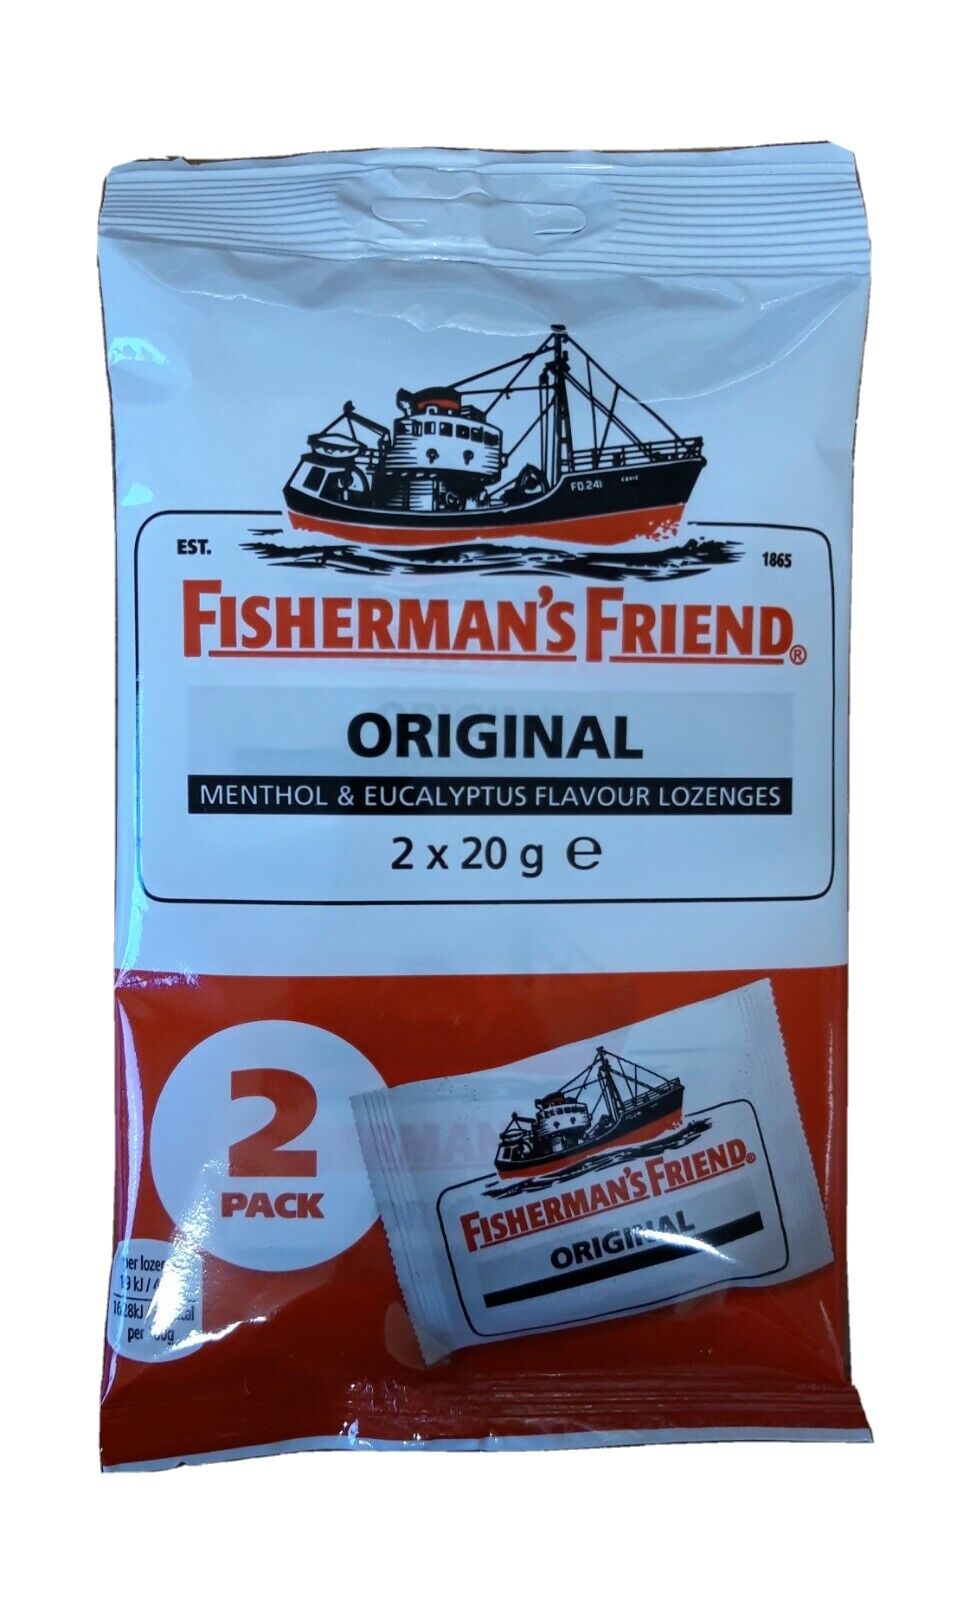 Fisherman's Original 2 x 20g